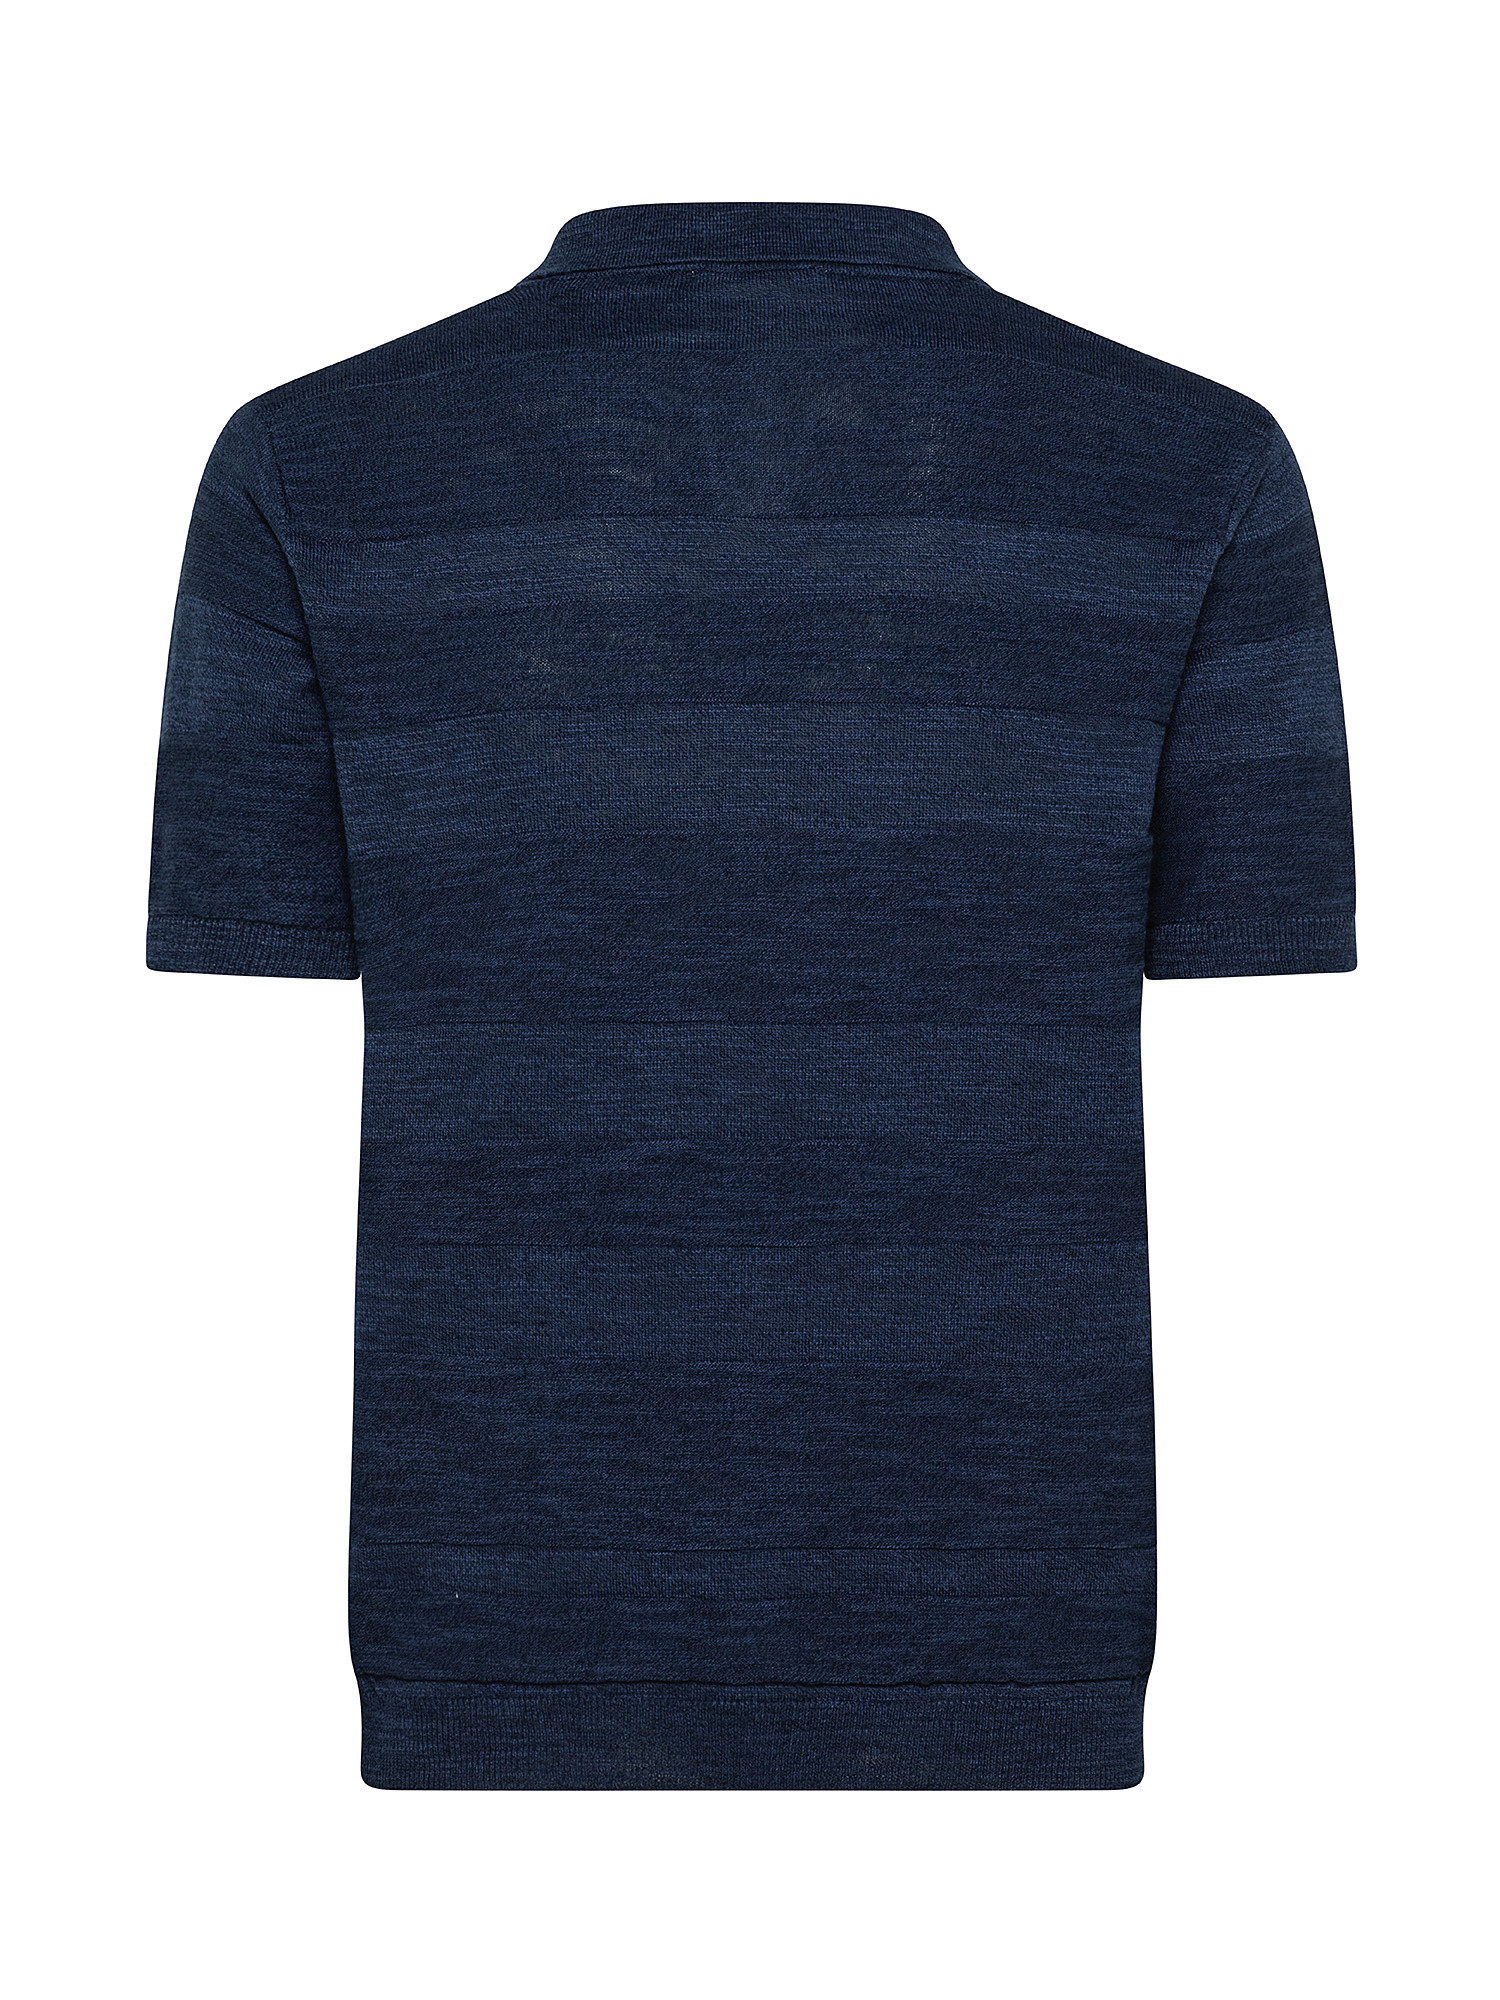 Polo in maglia misto cotone, Blu, large image number 1